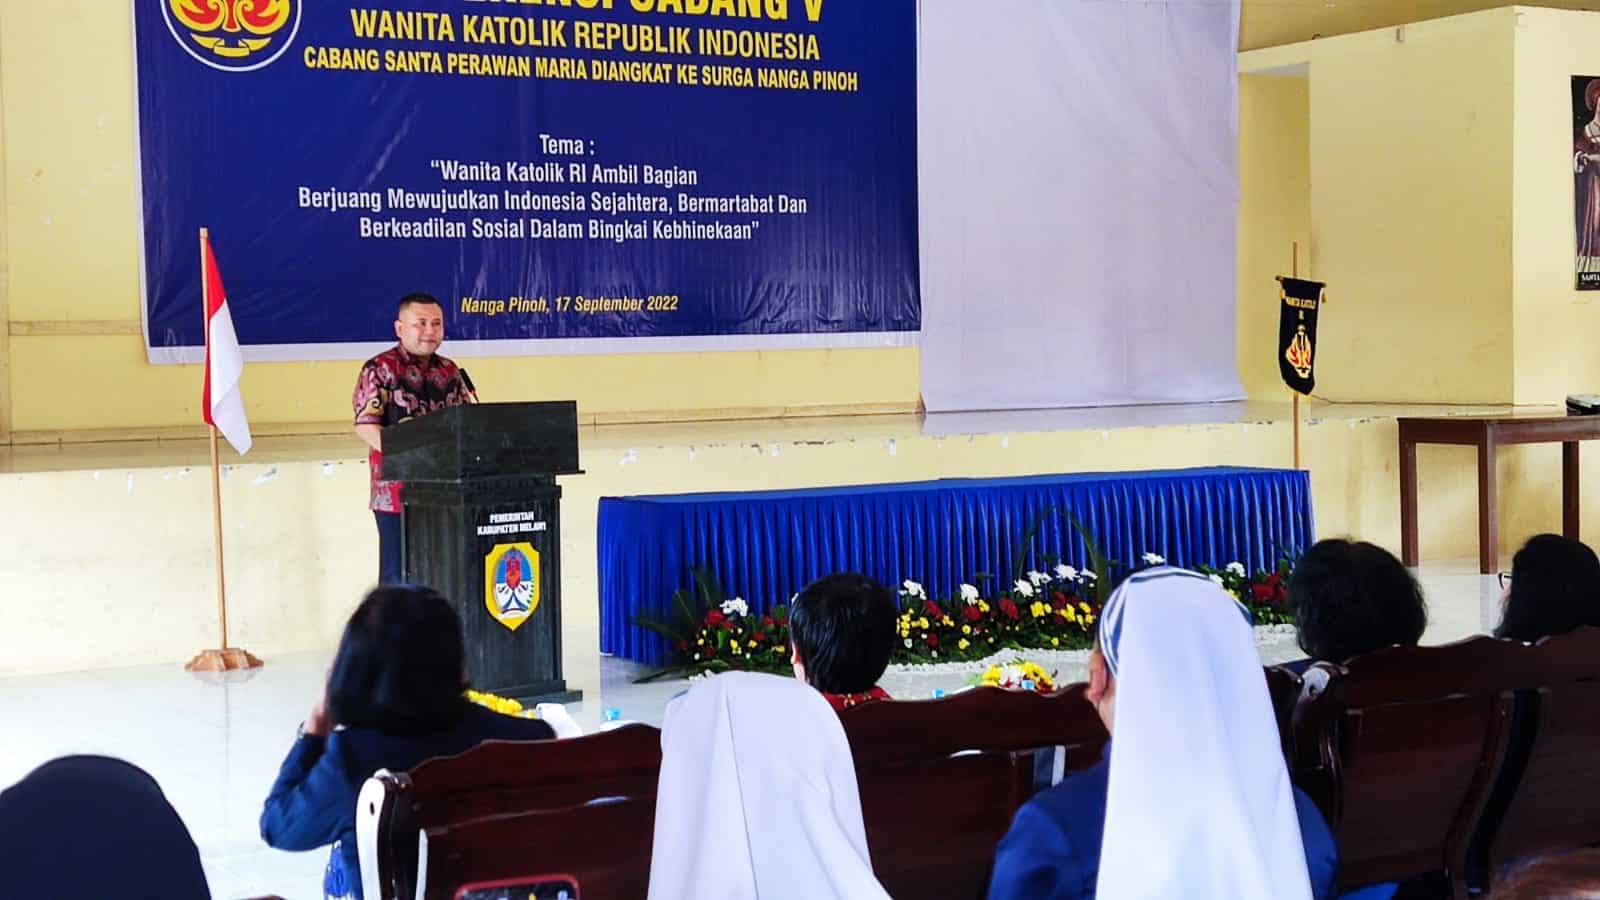 Bupati Melawi, Dadi Sunarya Usfa Yursa memberikan sambutan pada acara Konfercab V Wanita Katolik Republik Indonesia (WKRI) Cabang Santa Perawan Maria Diangkat Ke Surga (SPMDKS) Nanga Pinoh, di Aula Susteran Ursulin Nanga Pinoh, Sabtu (17/09/2022). (Foto: BS/KalbarOnline.com)